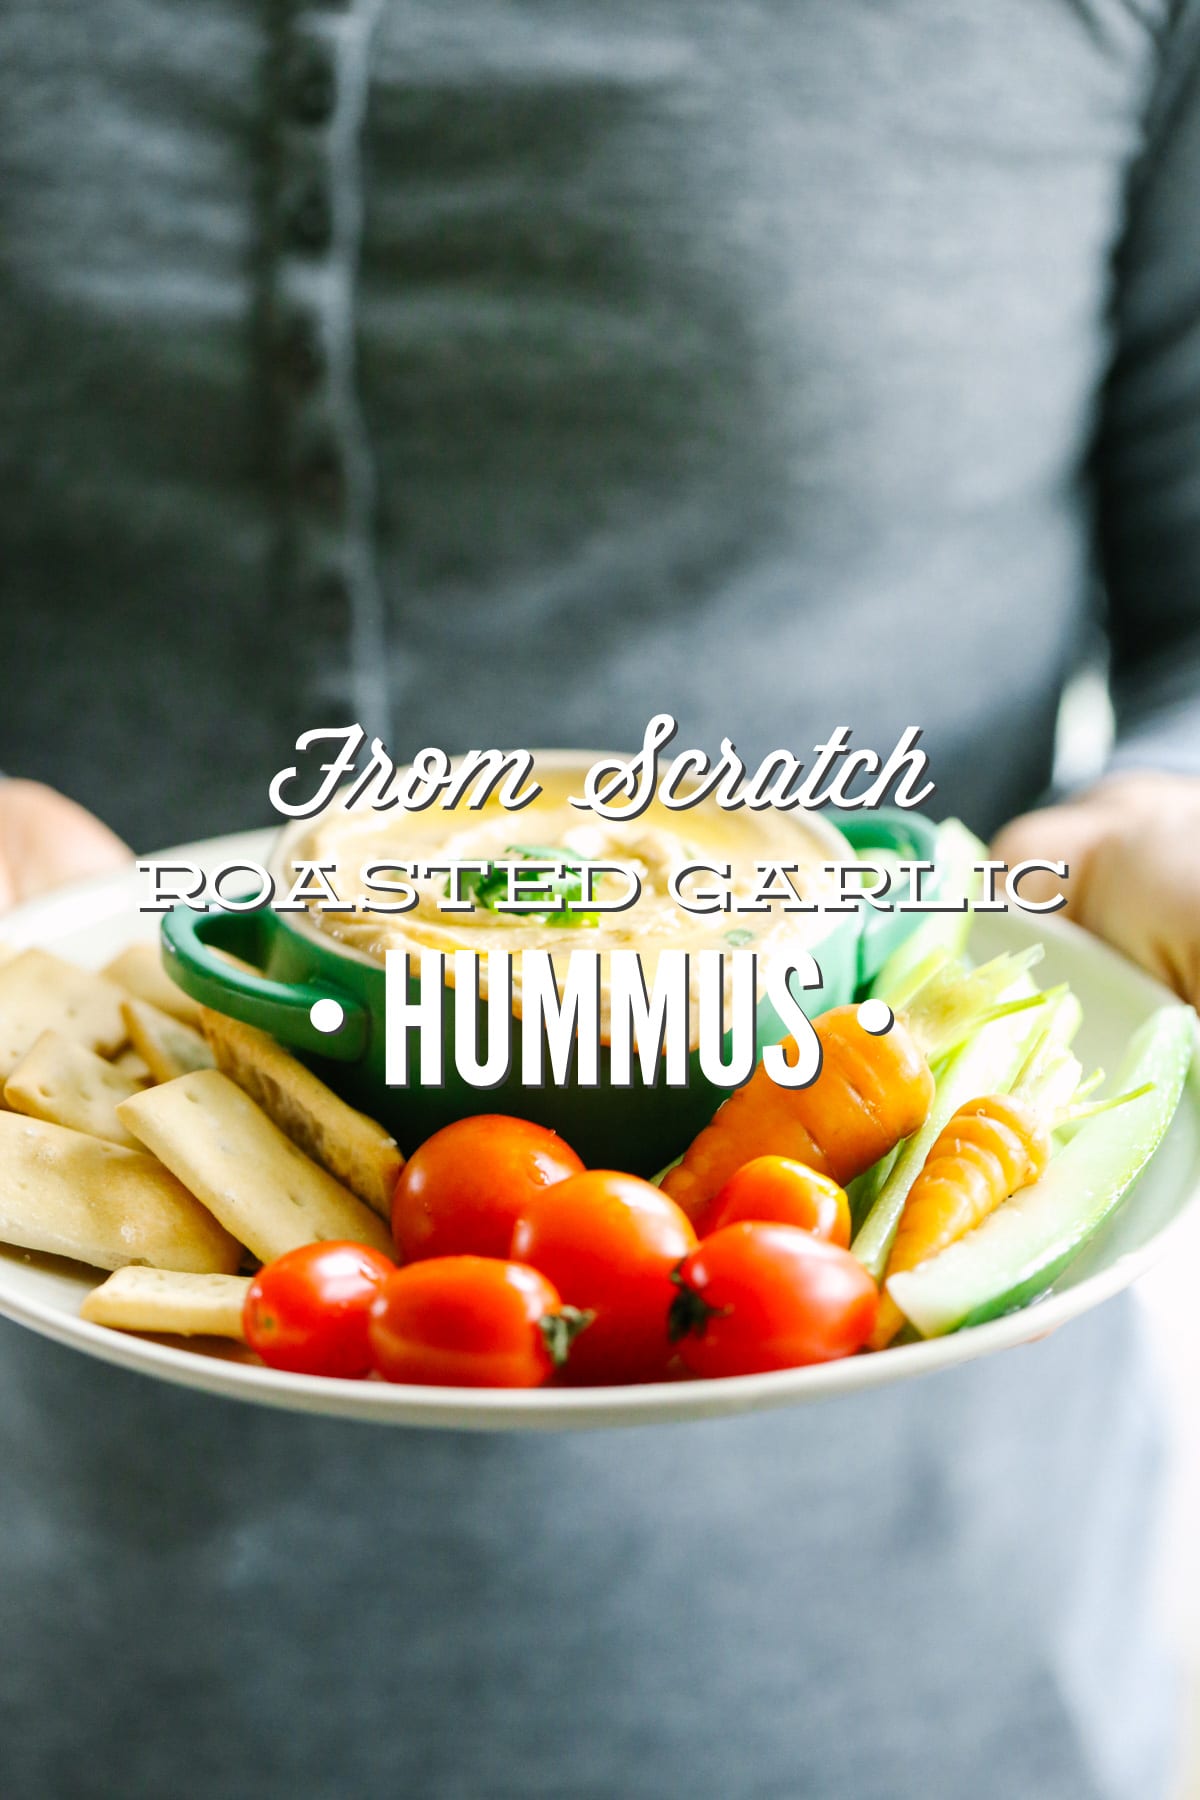 From-Scratch Roasted Garlic Hummus